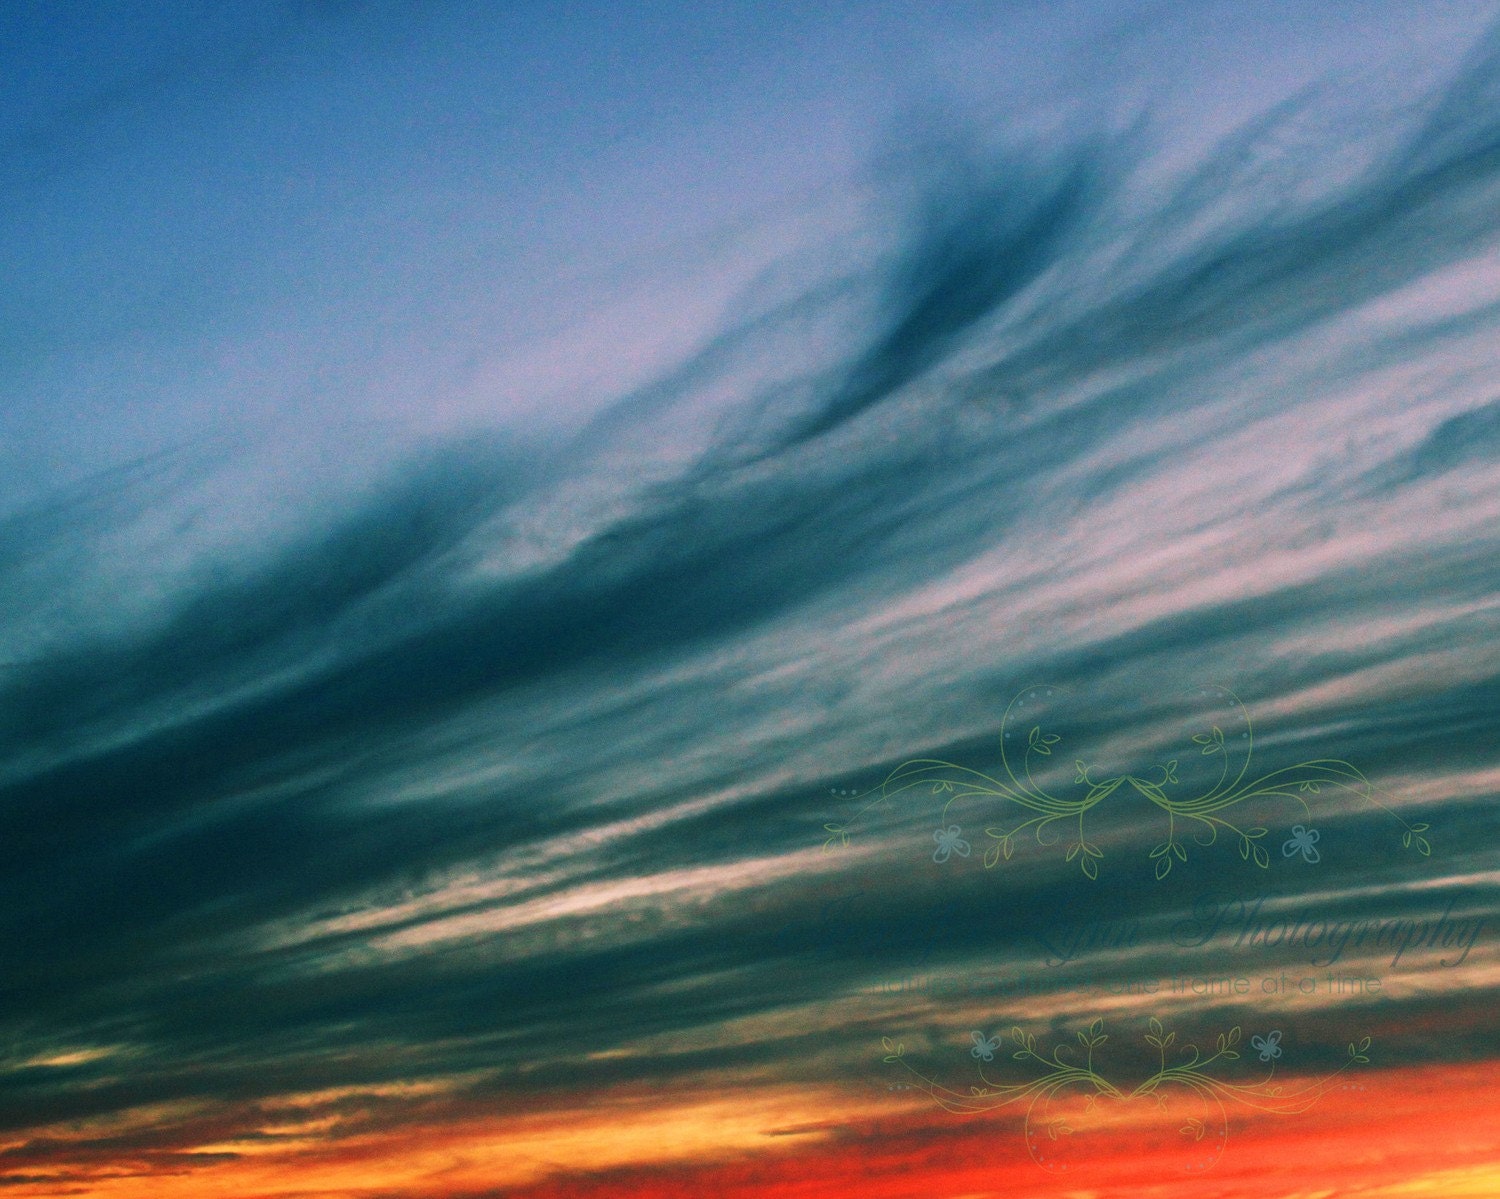 SALE / Windswept Sunset / IN STOCK / 8x10 Fine Art Photograph / clouds / orange / blue / red / navy - JenniferLynnPhotos